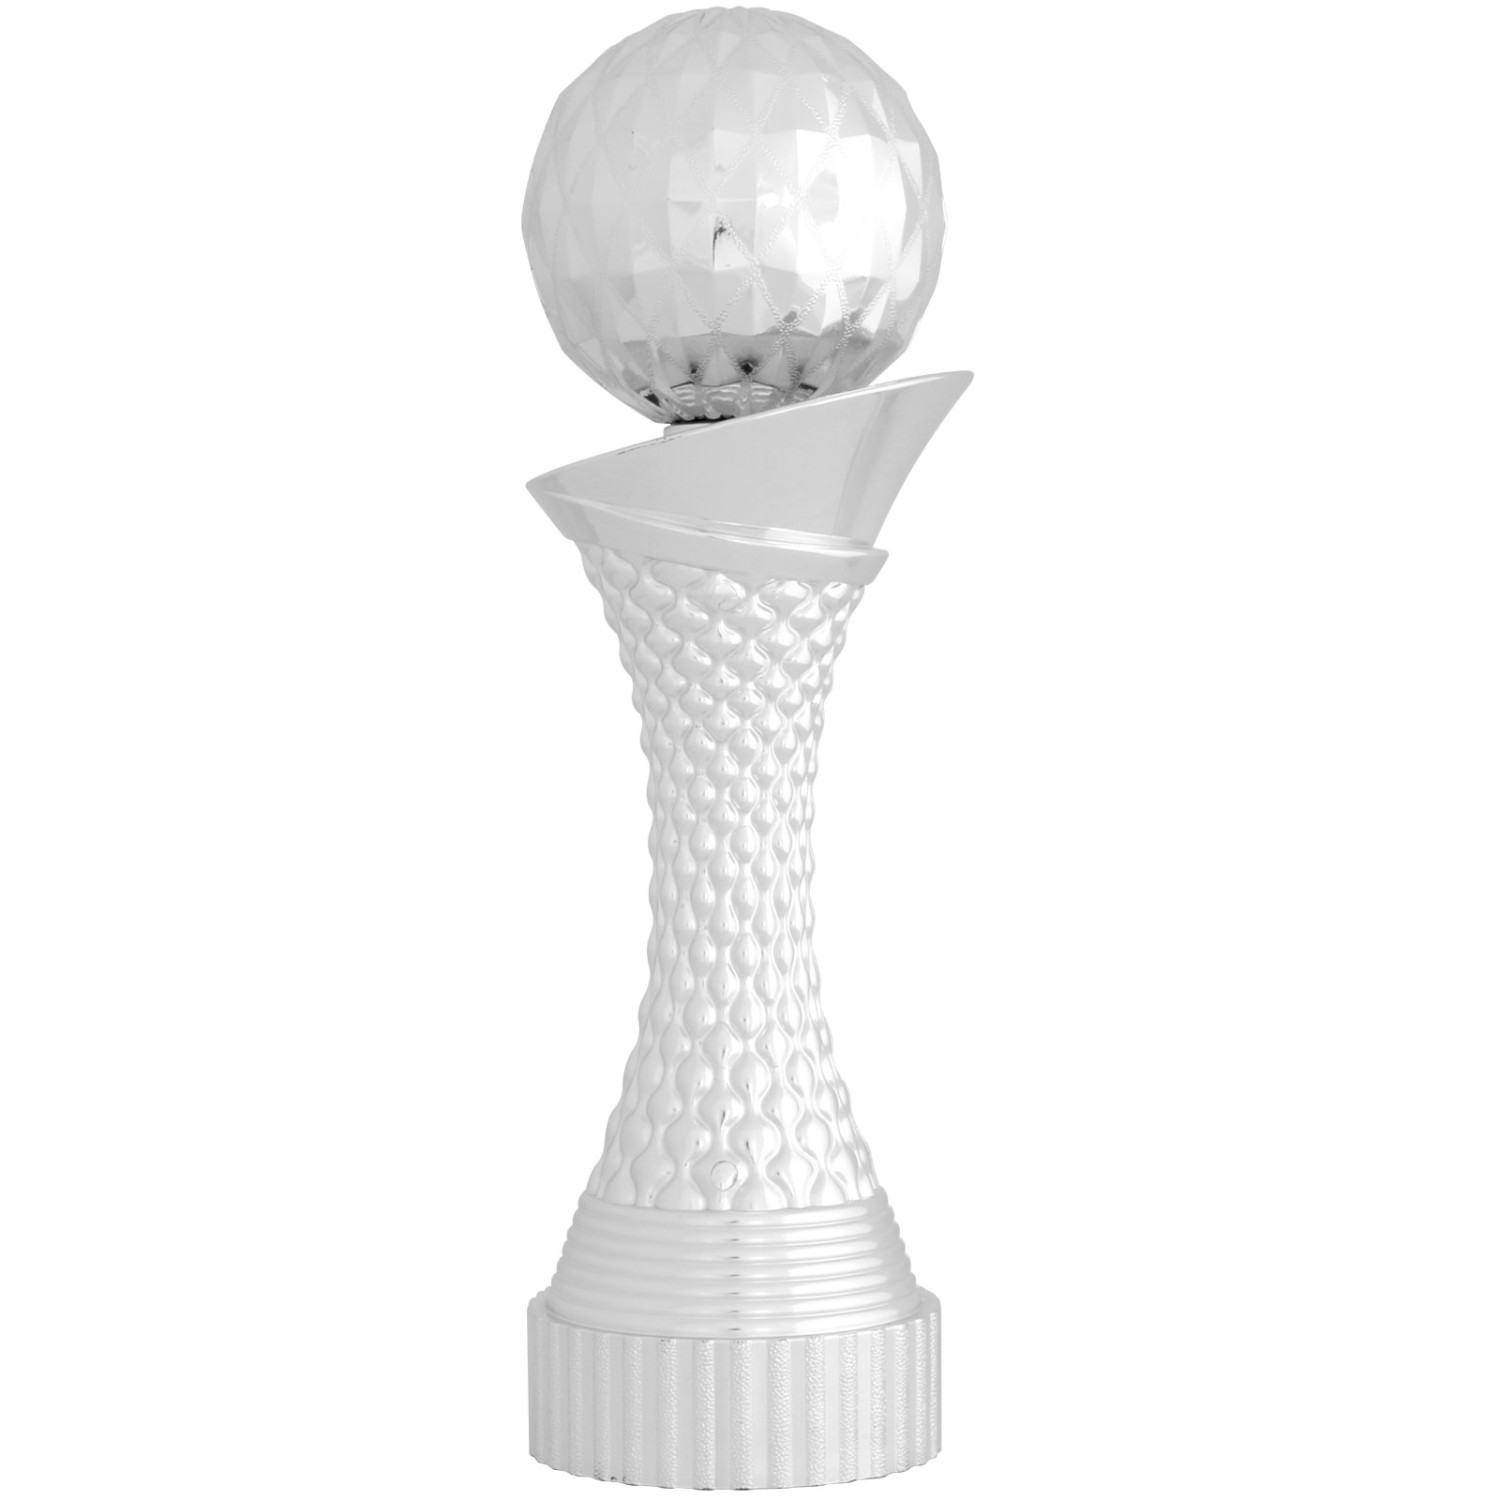 1. Foto Basketball Pokal AVORD silber mit Gravur (Größe: S 23cm hoch)